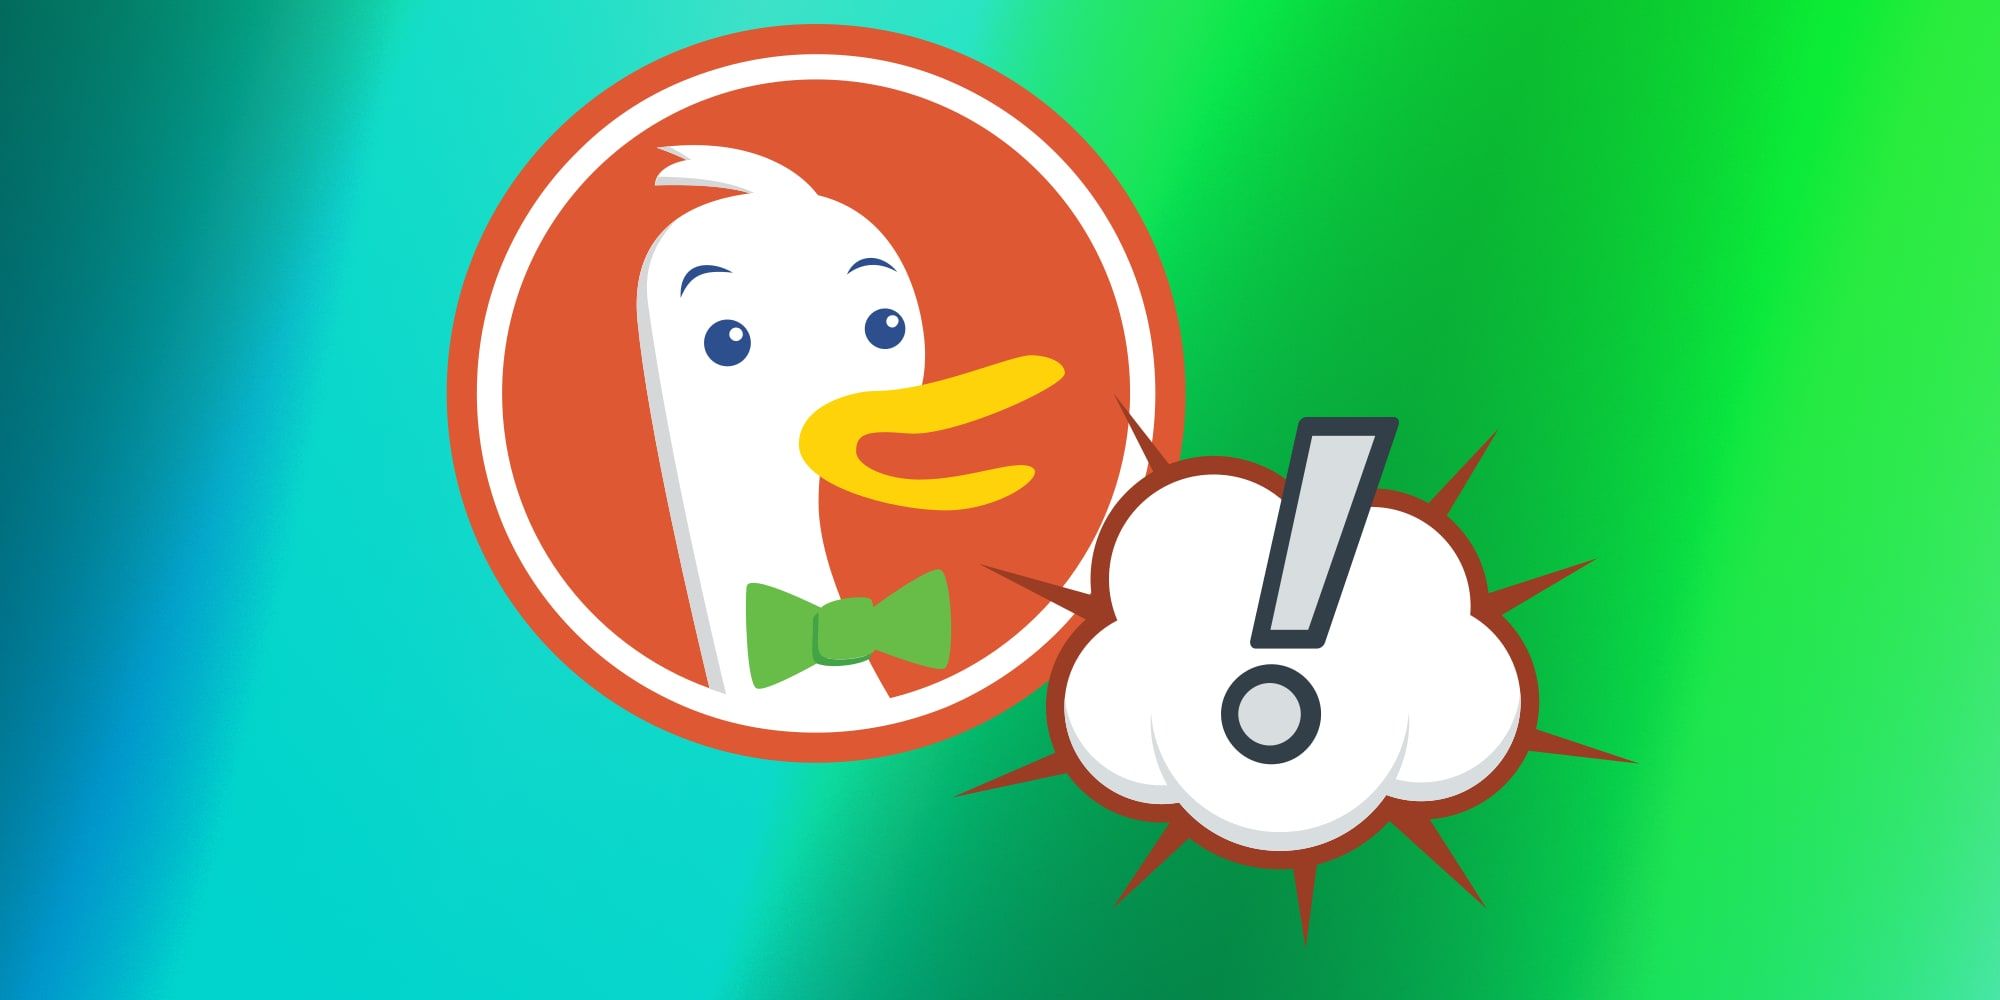 DuckDuckGo Search Engine And Bang Shortcut Symbol